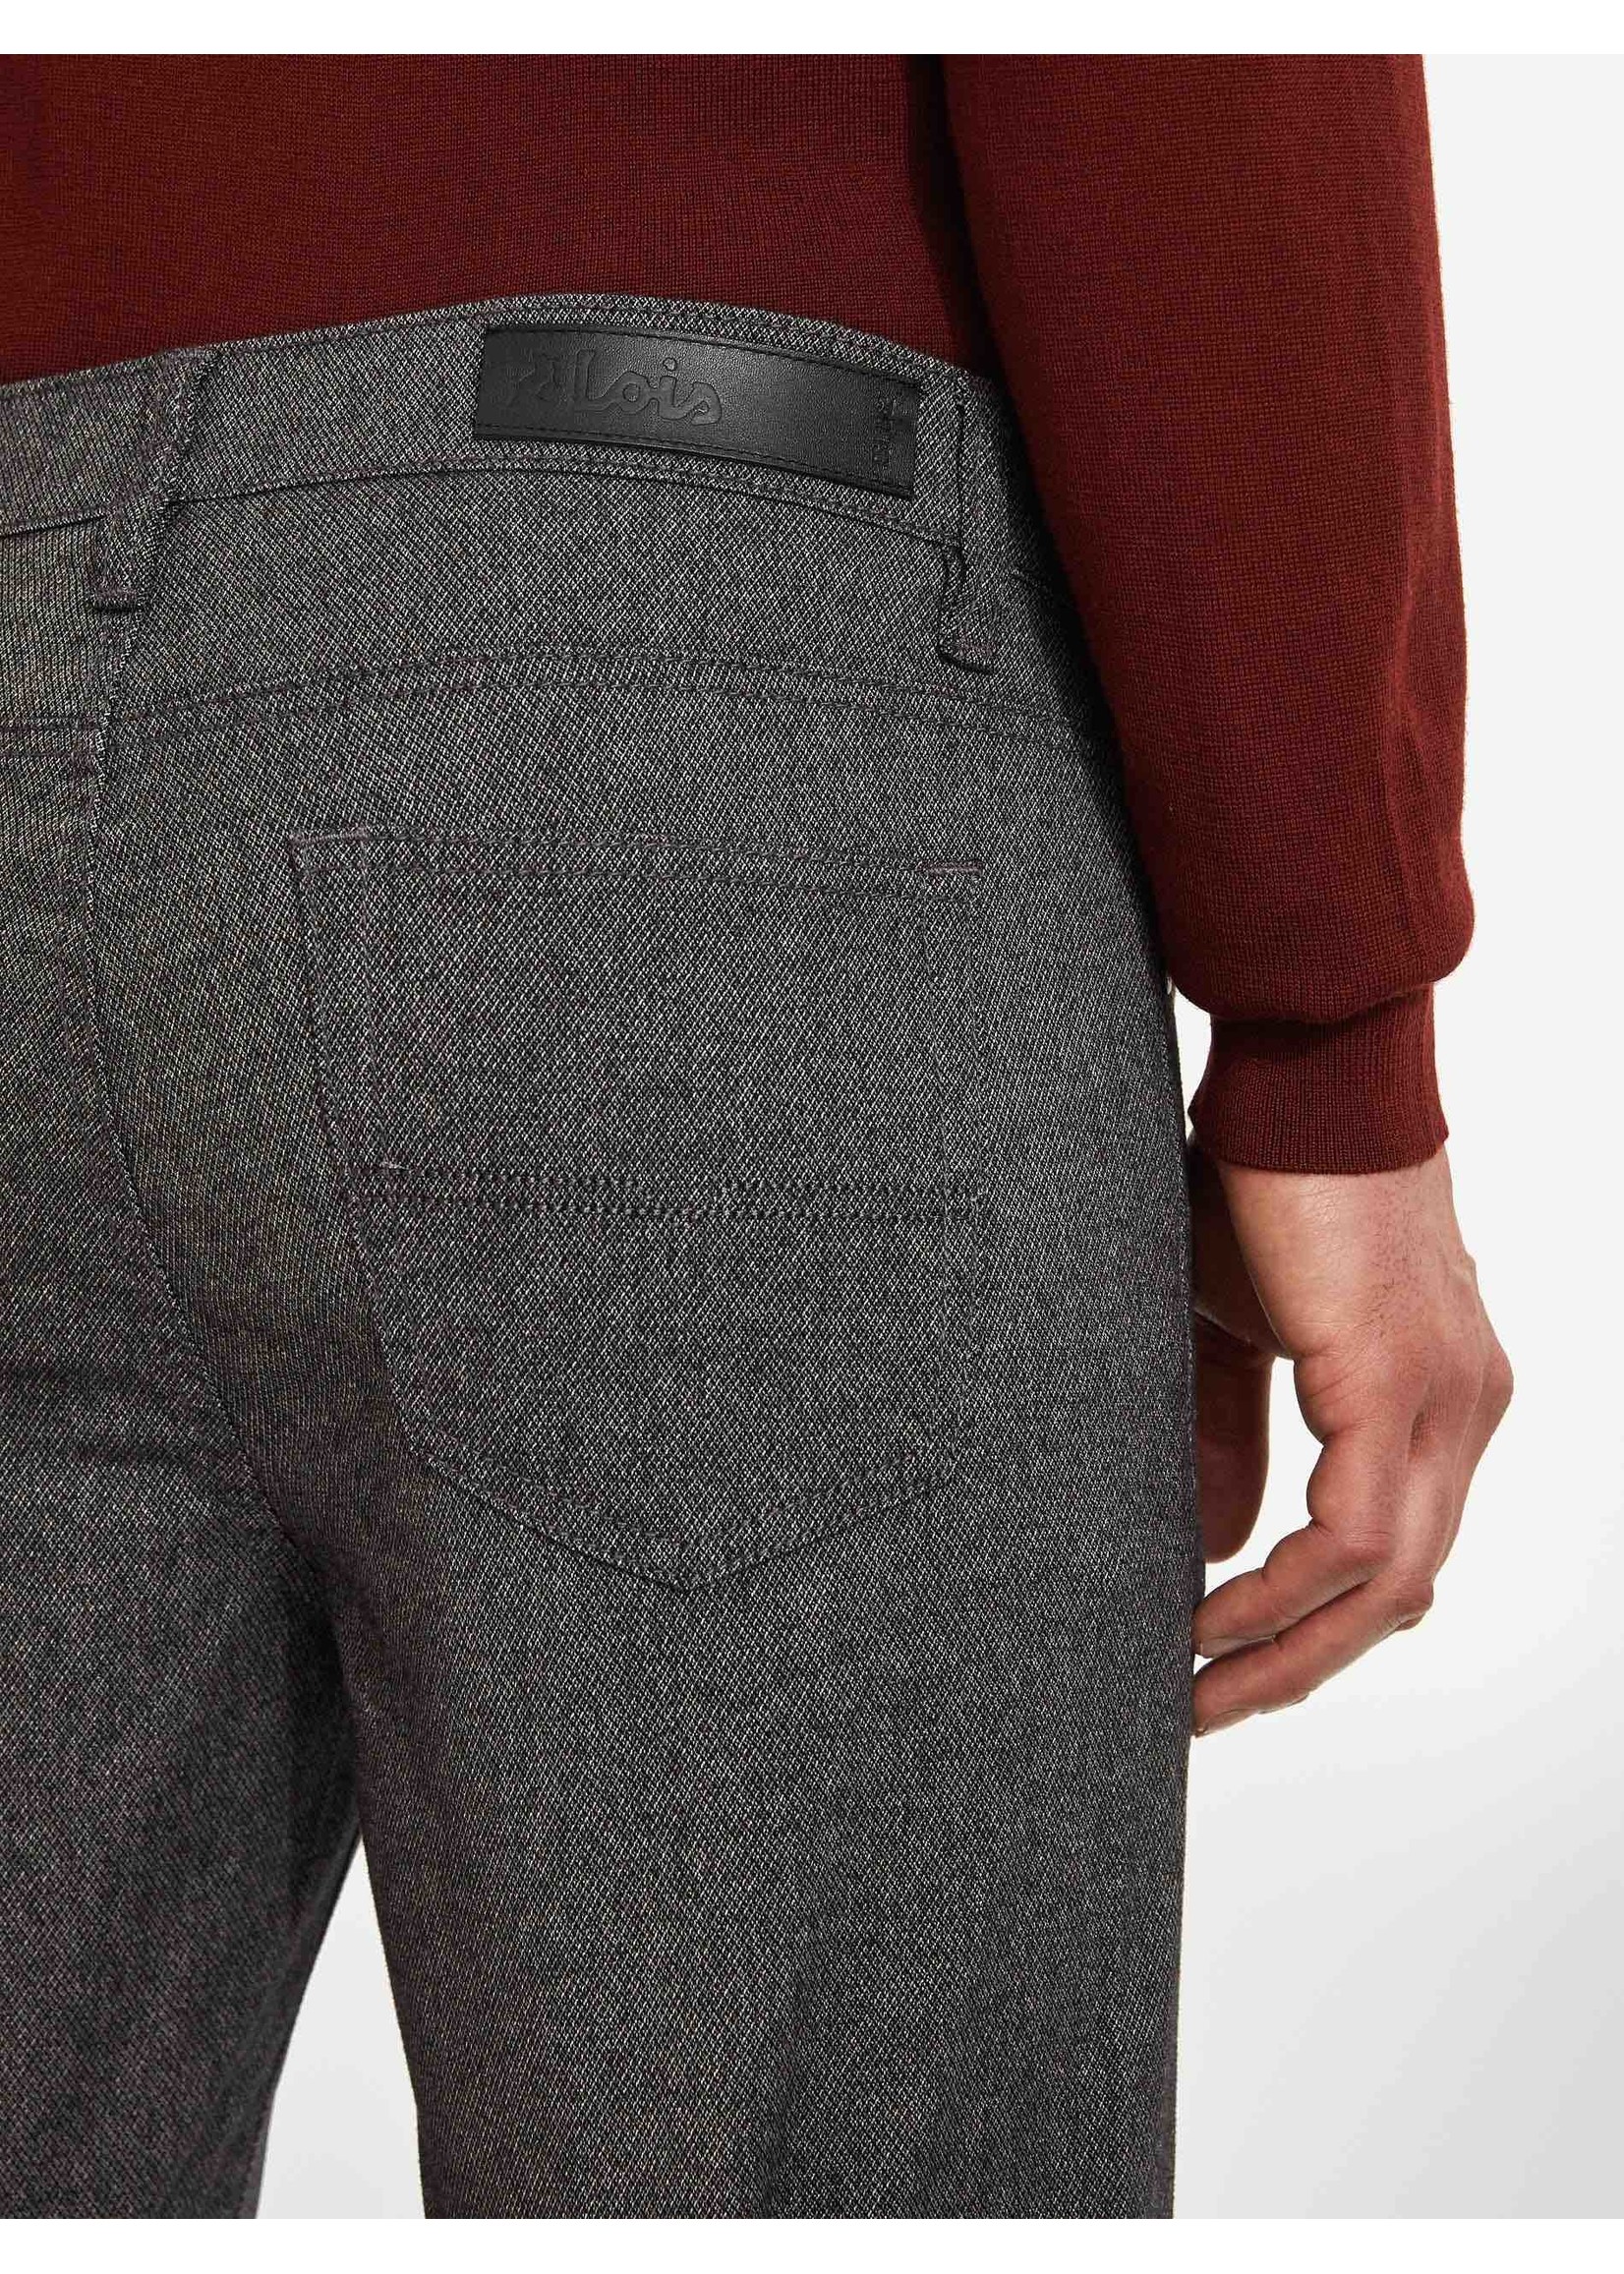 LOIS JEANS & JACKETS Pantalon 5 poches Brad Slim-Homme